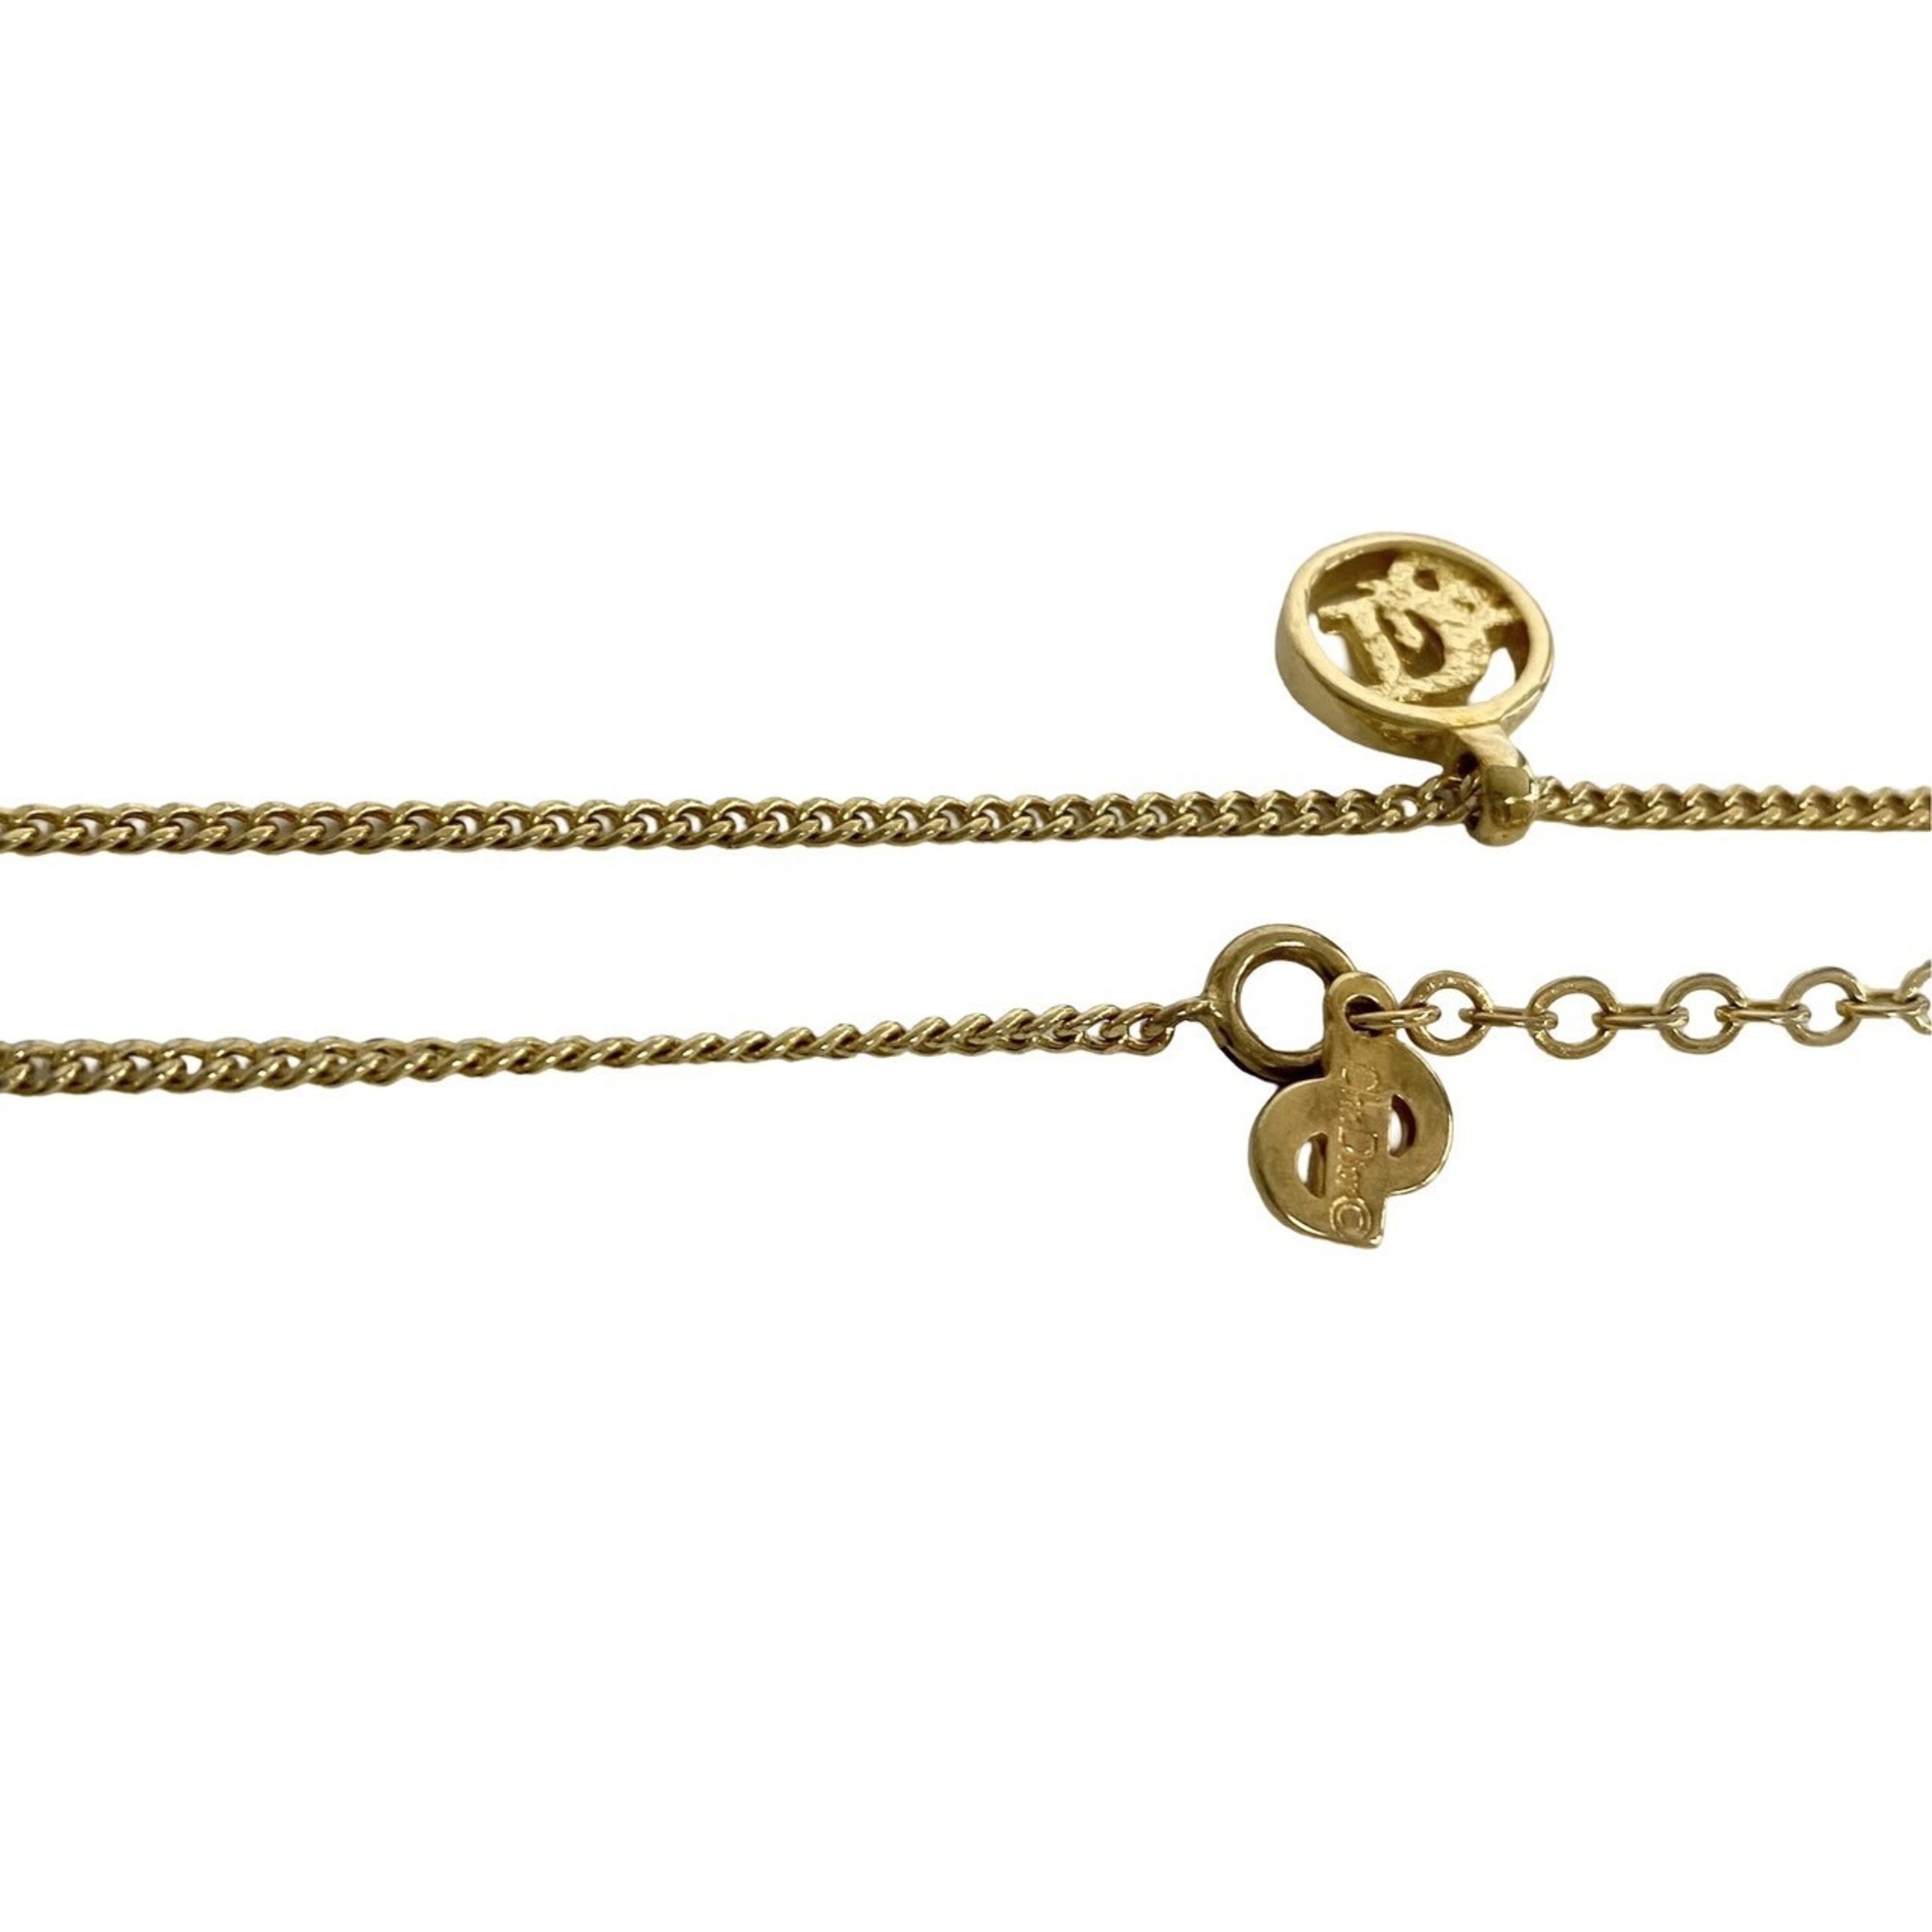 Christian Dior Motif Chain Necklace Pendant Women's Gold 26674